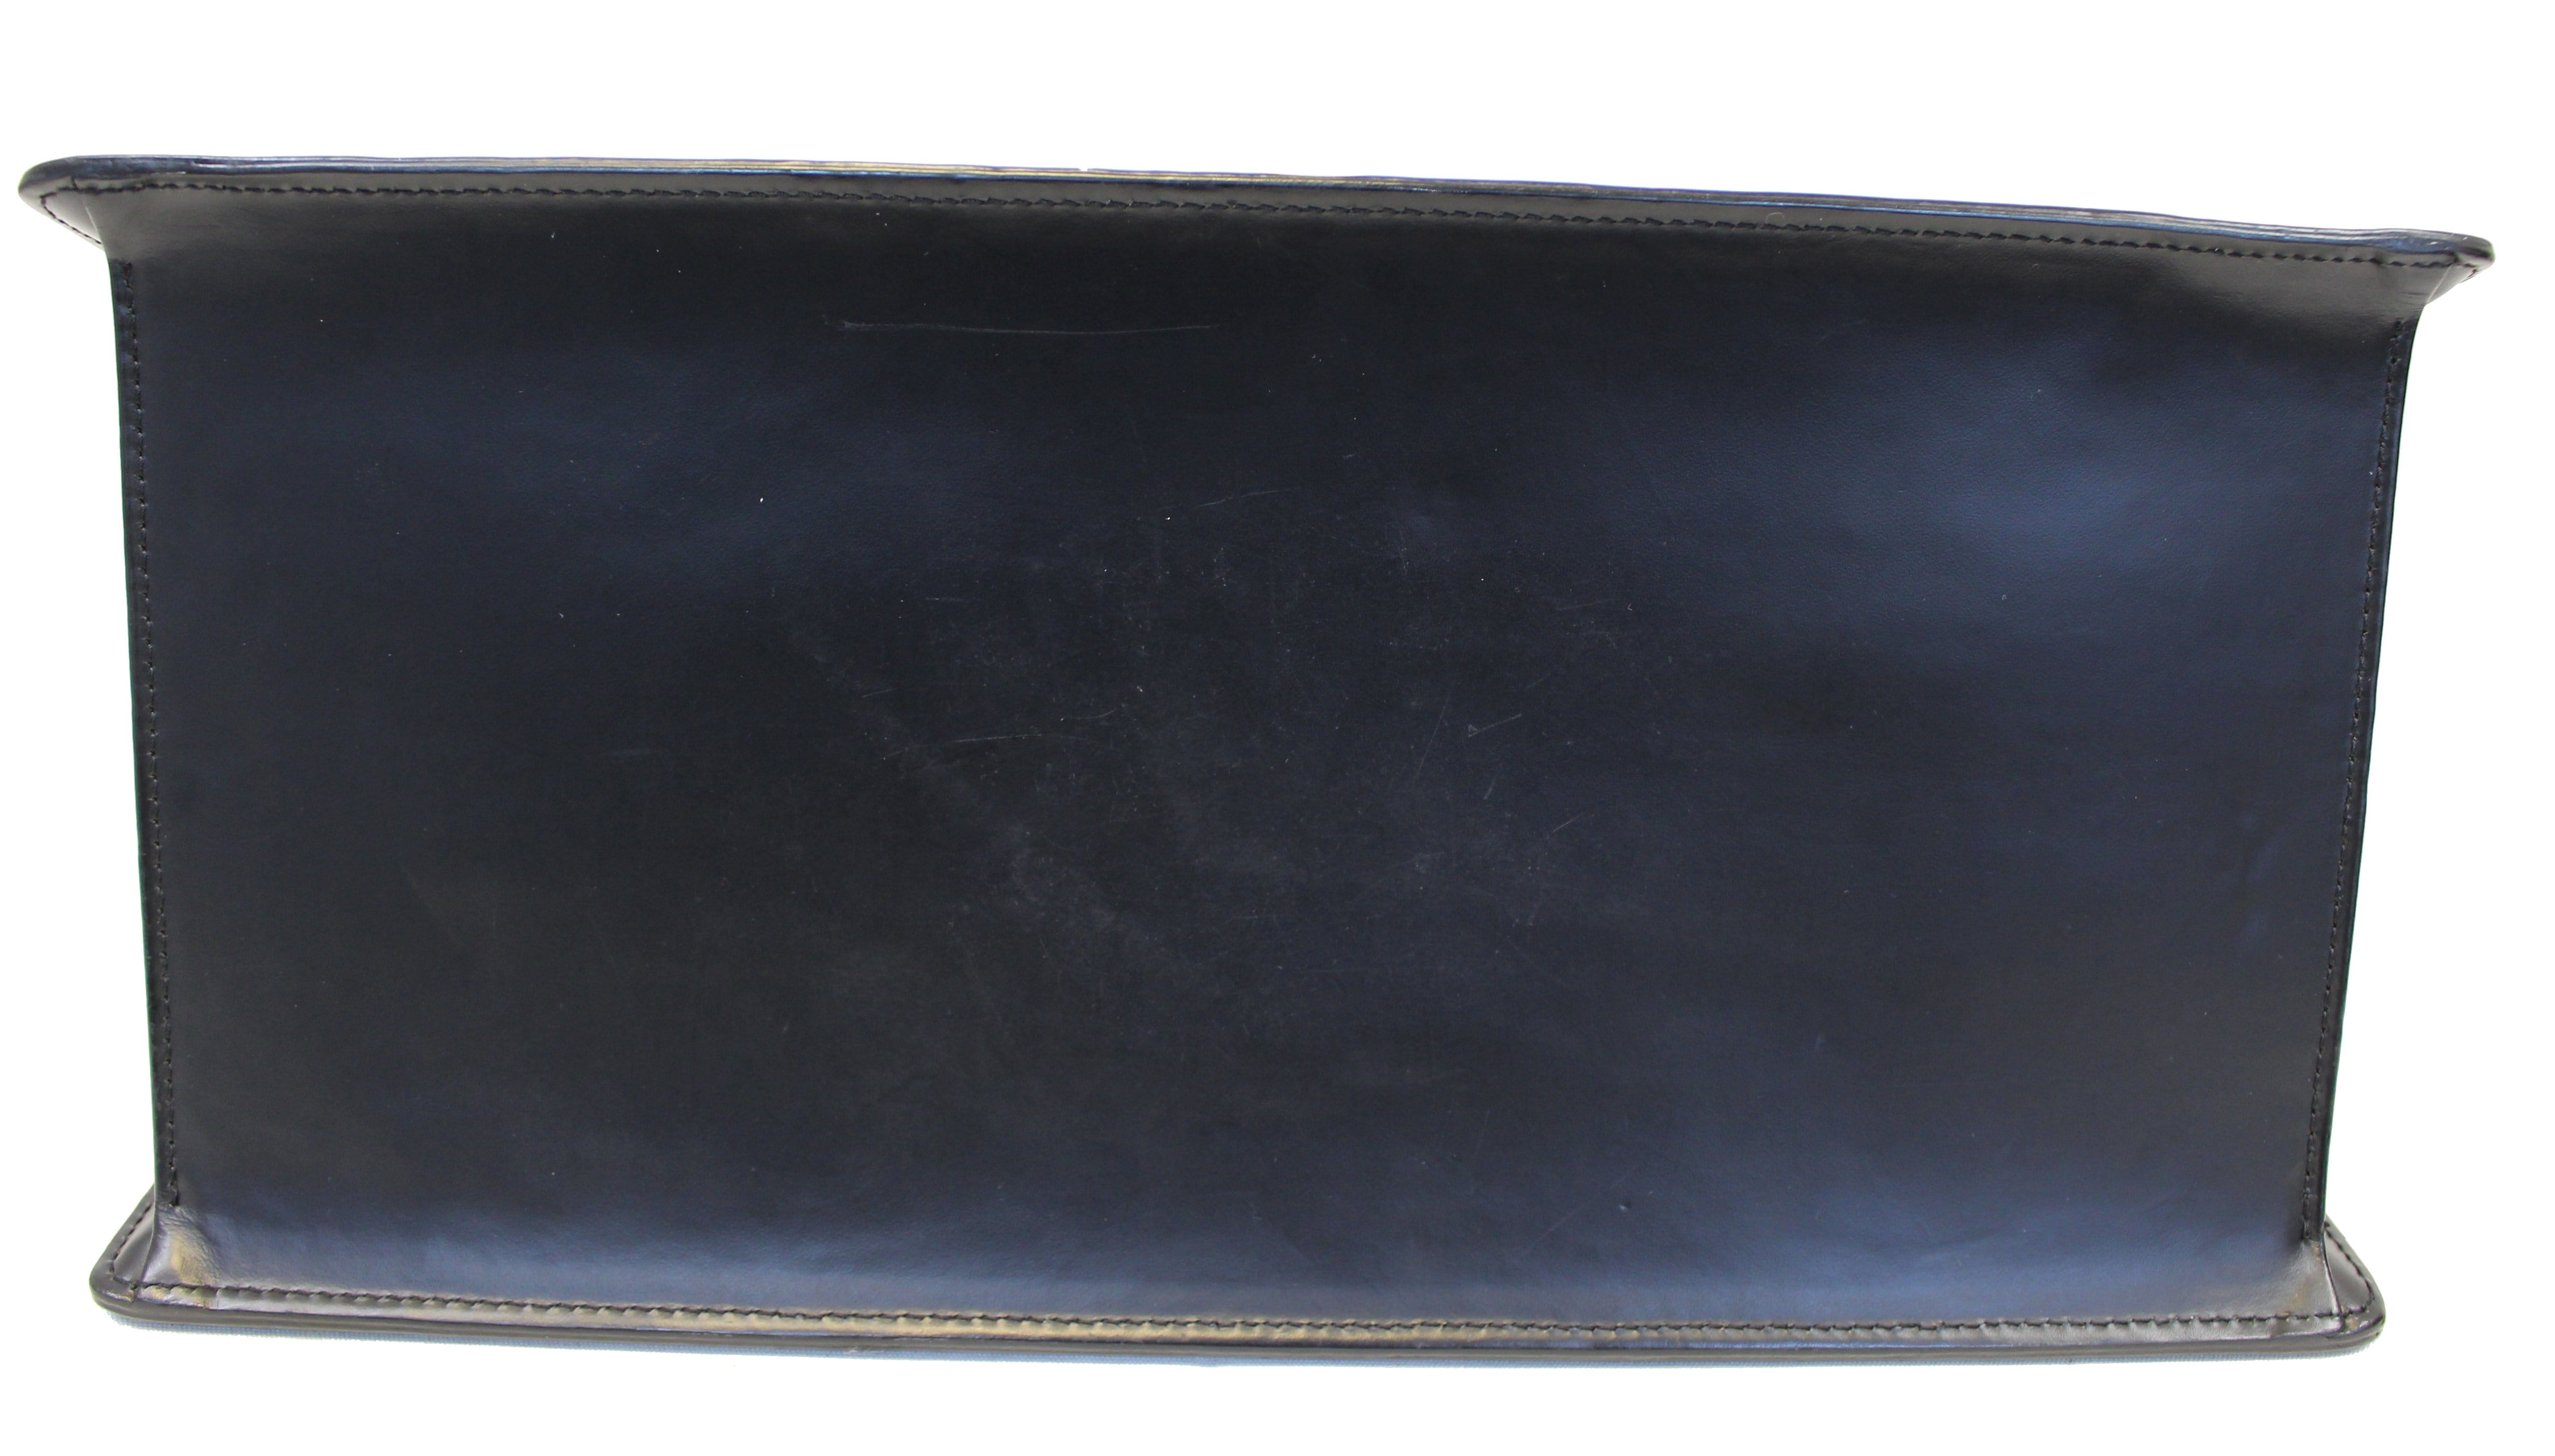 Louis Vuitton Epi Riviera Handle Bag - Blue Handle Bags, Handbags -  LOU723665